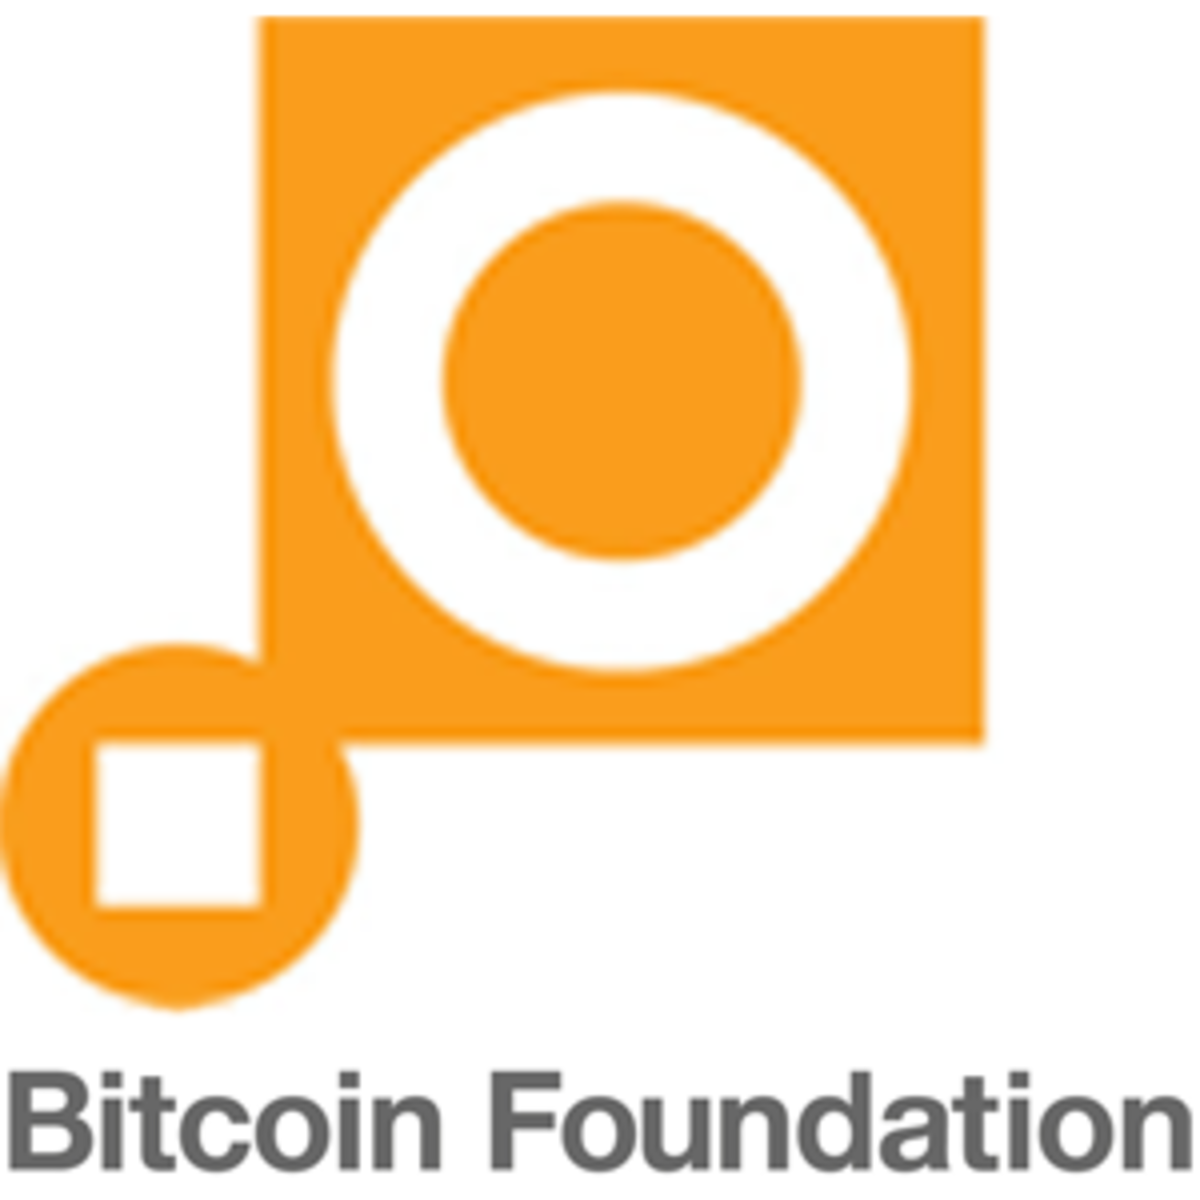 Op-ed - Jon Matonis Named New Executive Director of Bitcoin Foundation